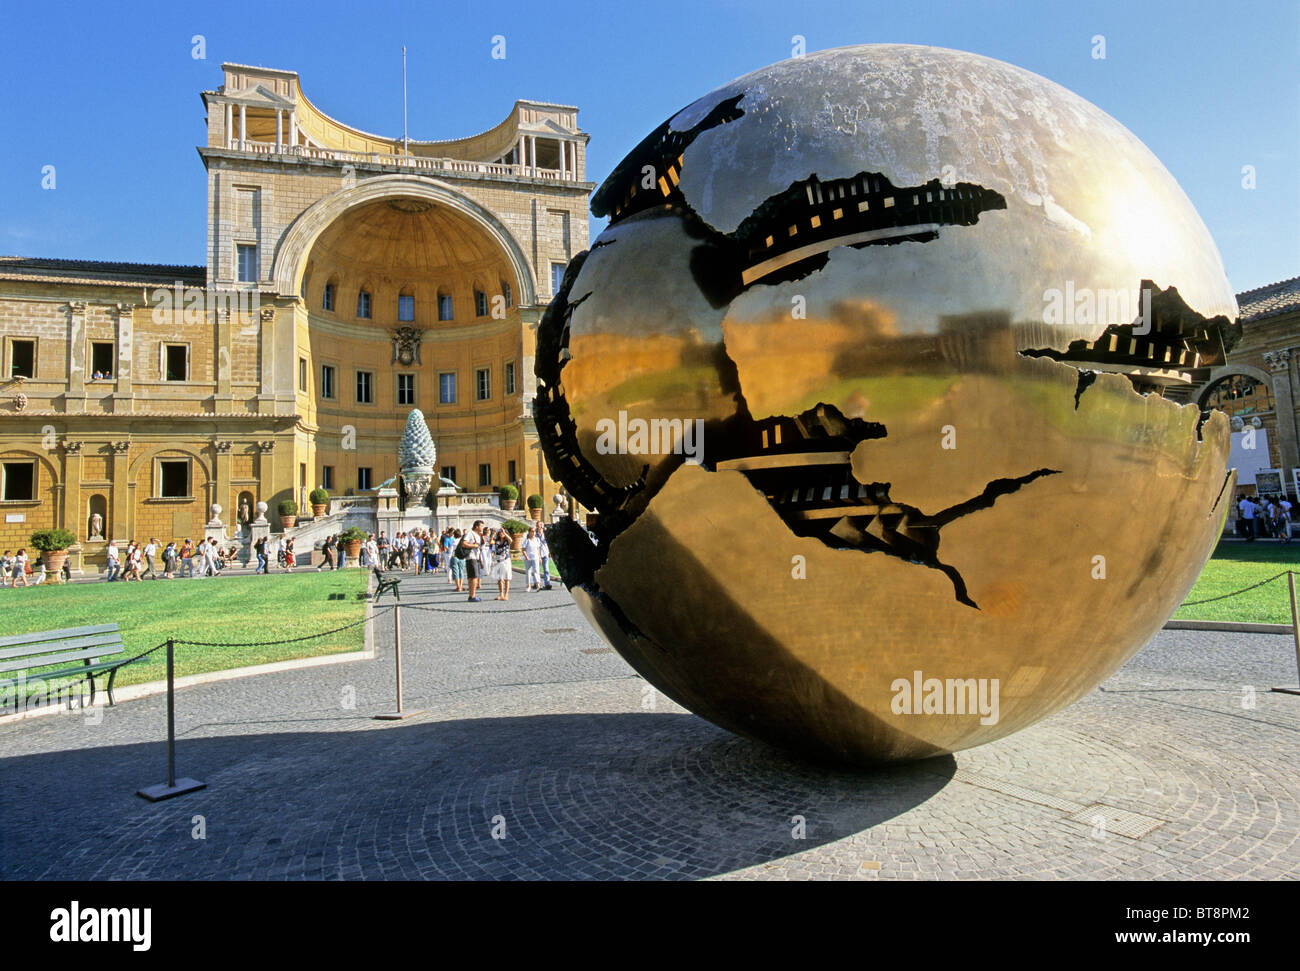 Mappa Monda Globus, Palazzetto del Belvedere mit riesigen Tannenzapfen, Cortile della Pigna Museum, Vatikanische Museen, Vatikanstadt Stockfoto